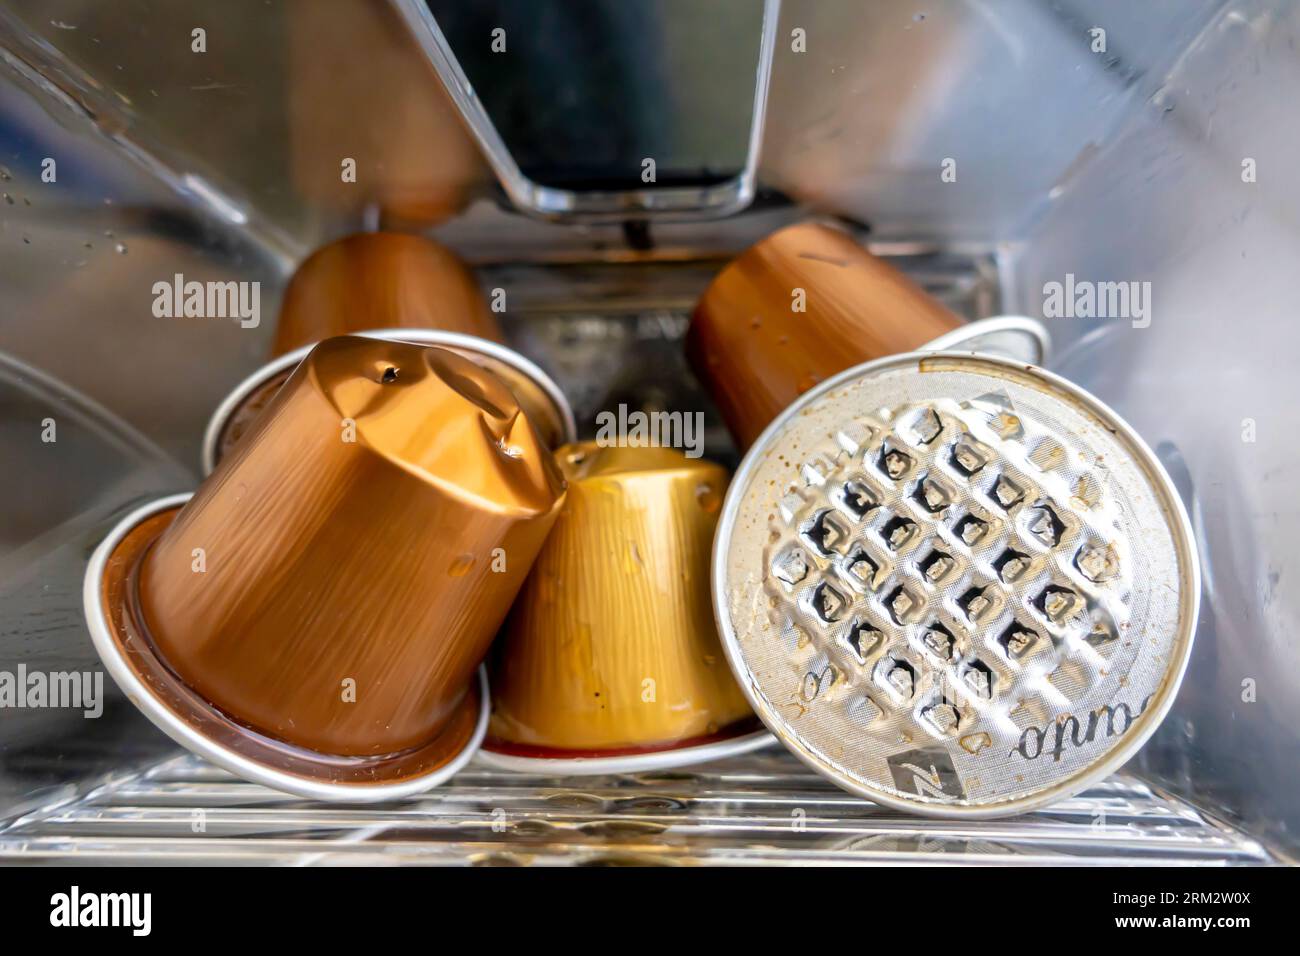 Gebrauchte Espresso-Kaffeekapseln. Nespresso-Kaffeekapsel entsorgt. Kaffeepads in der Maschine, durchbohrte nespresso-Kapseln, durchbohrte Kaffeepads Stockfoto